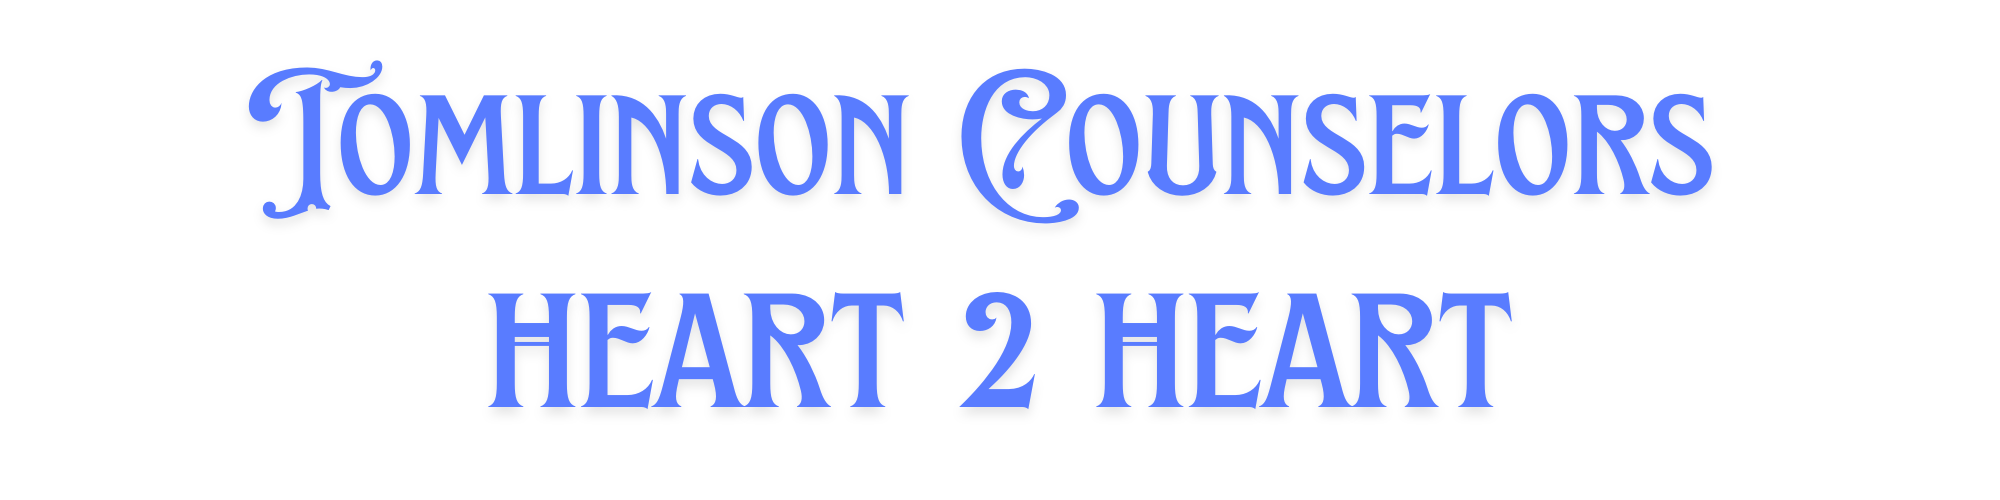 tomlinson-counselors-heart-2-heart